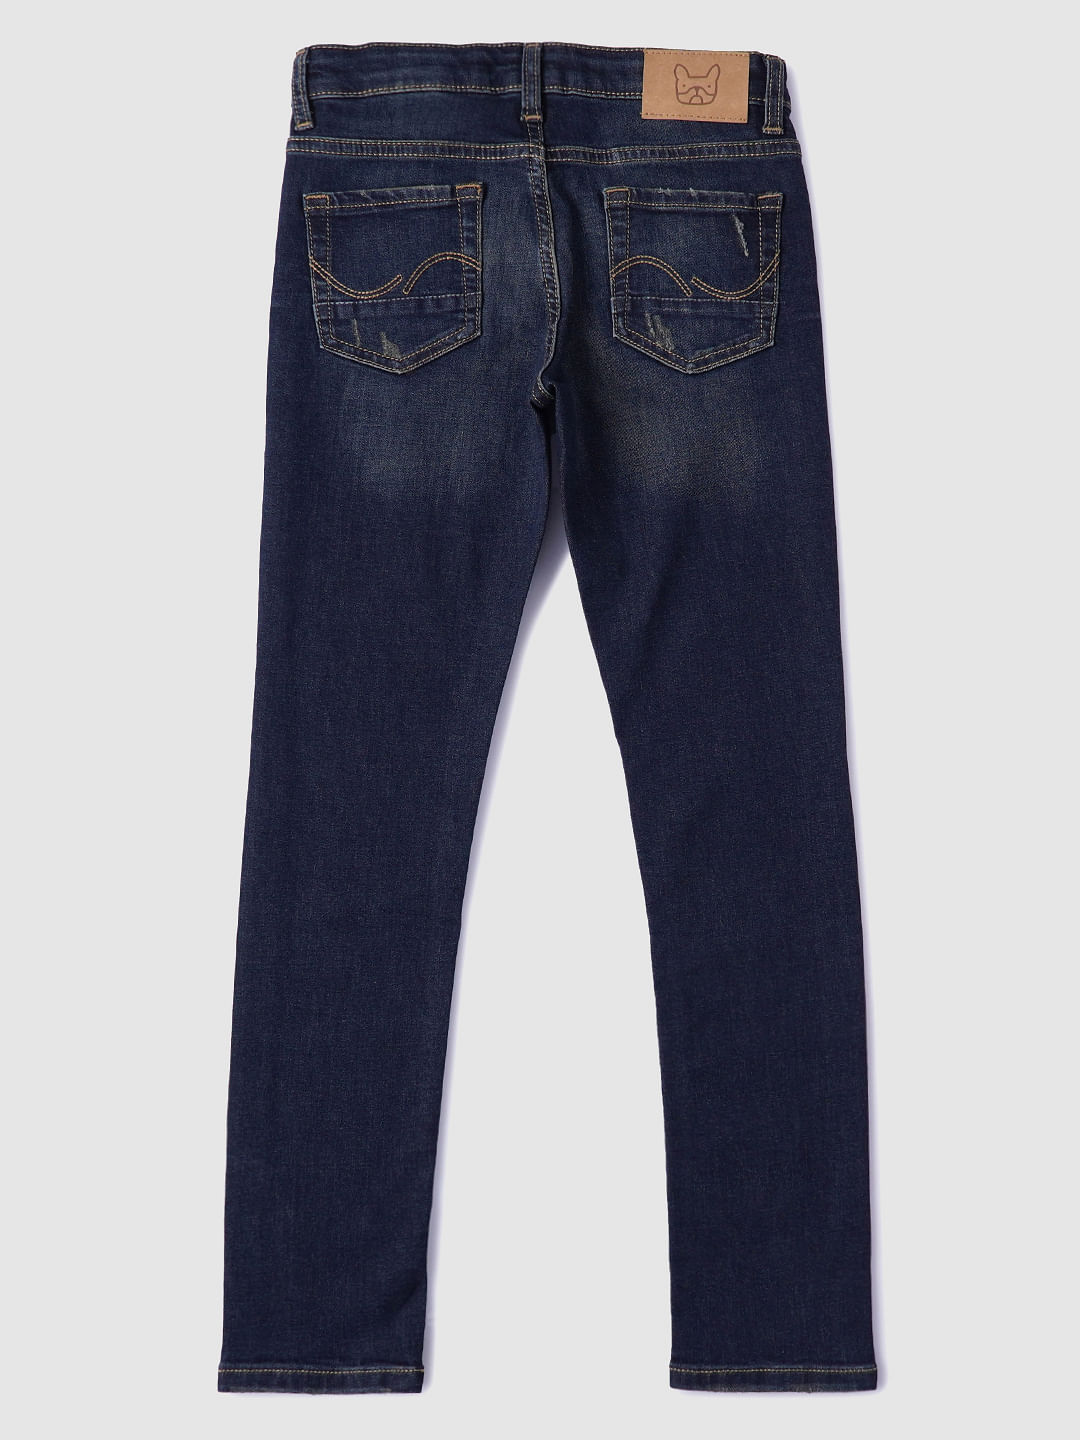 Buy Blue Mid Rise Ripped Slim Jeans for Boys Online at JackJones Junior  149677001